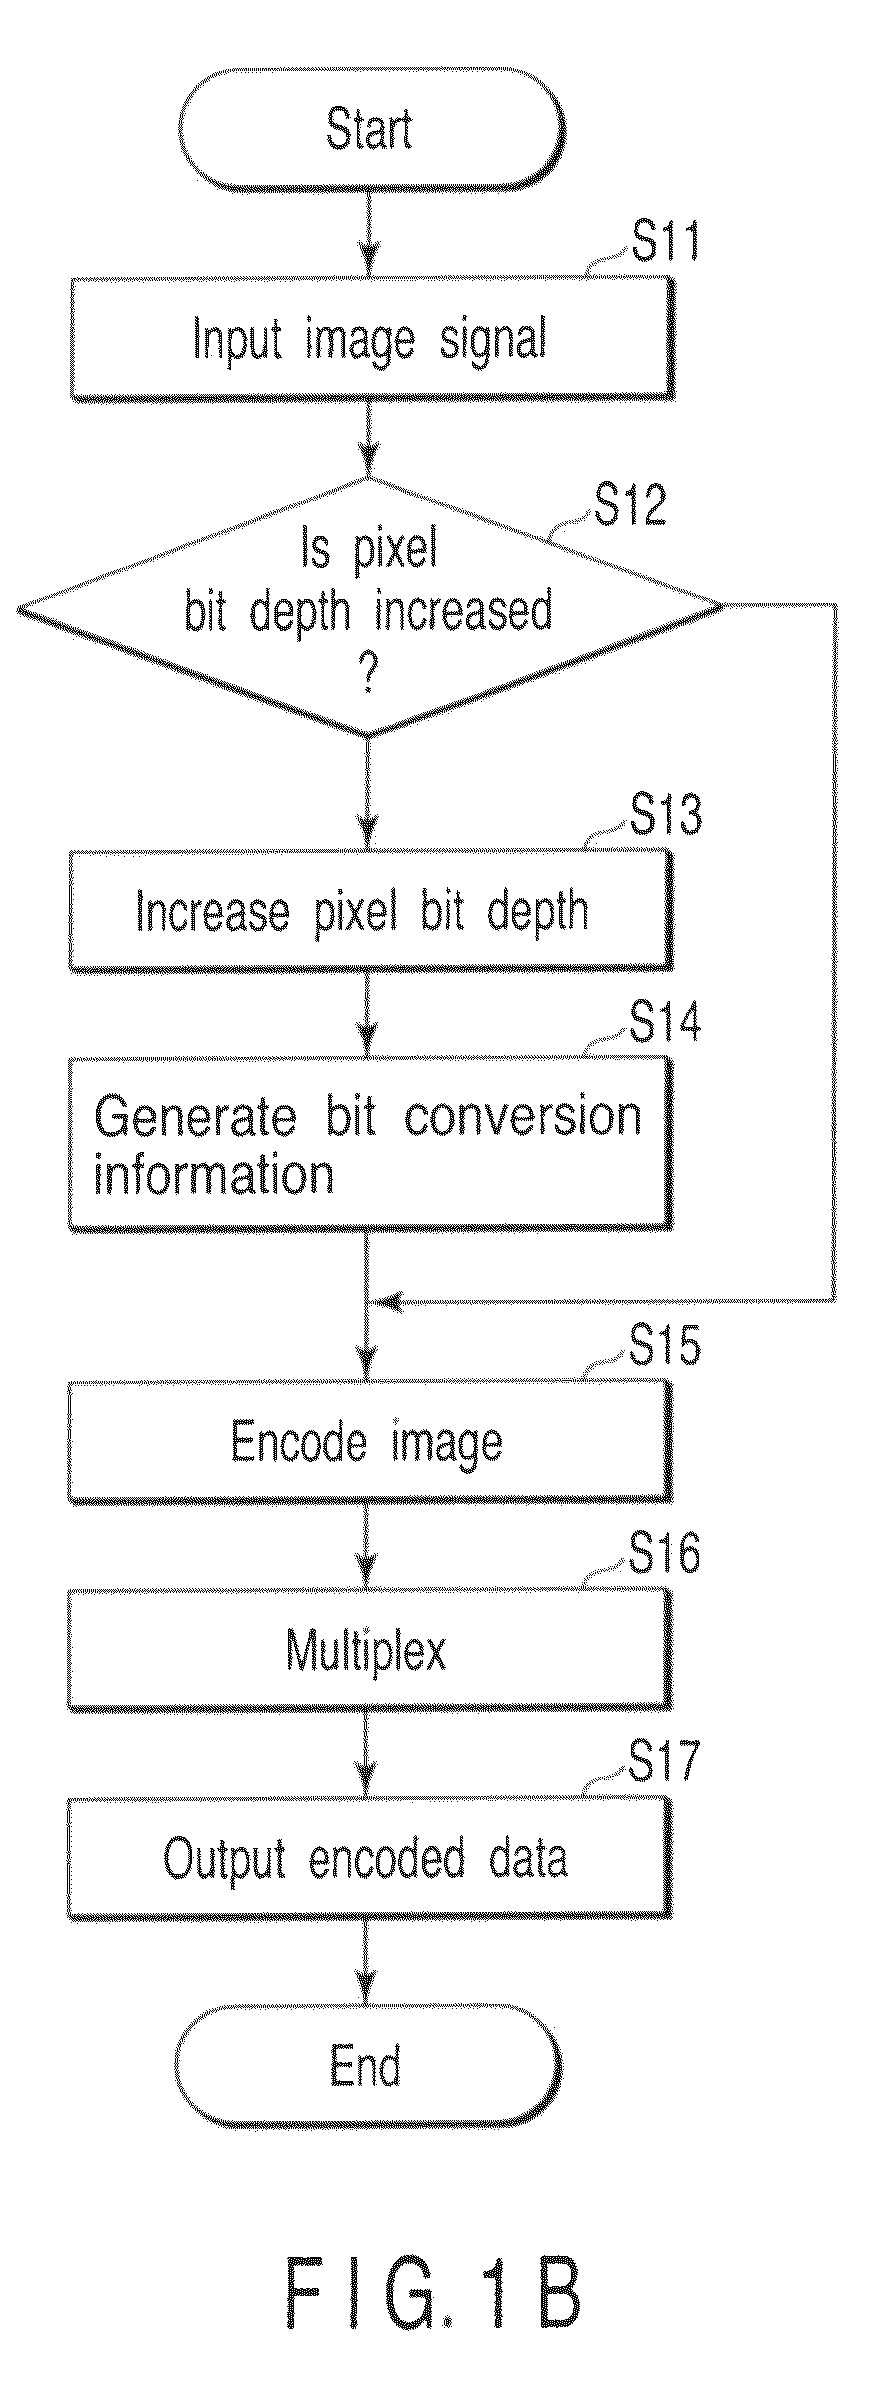 Pixel bit depth conversion in image encoding and decoding